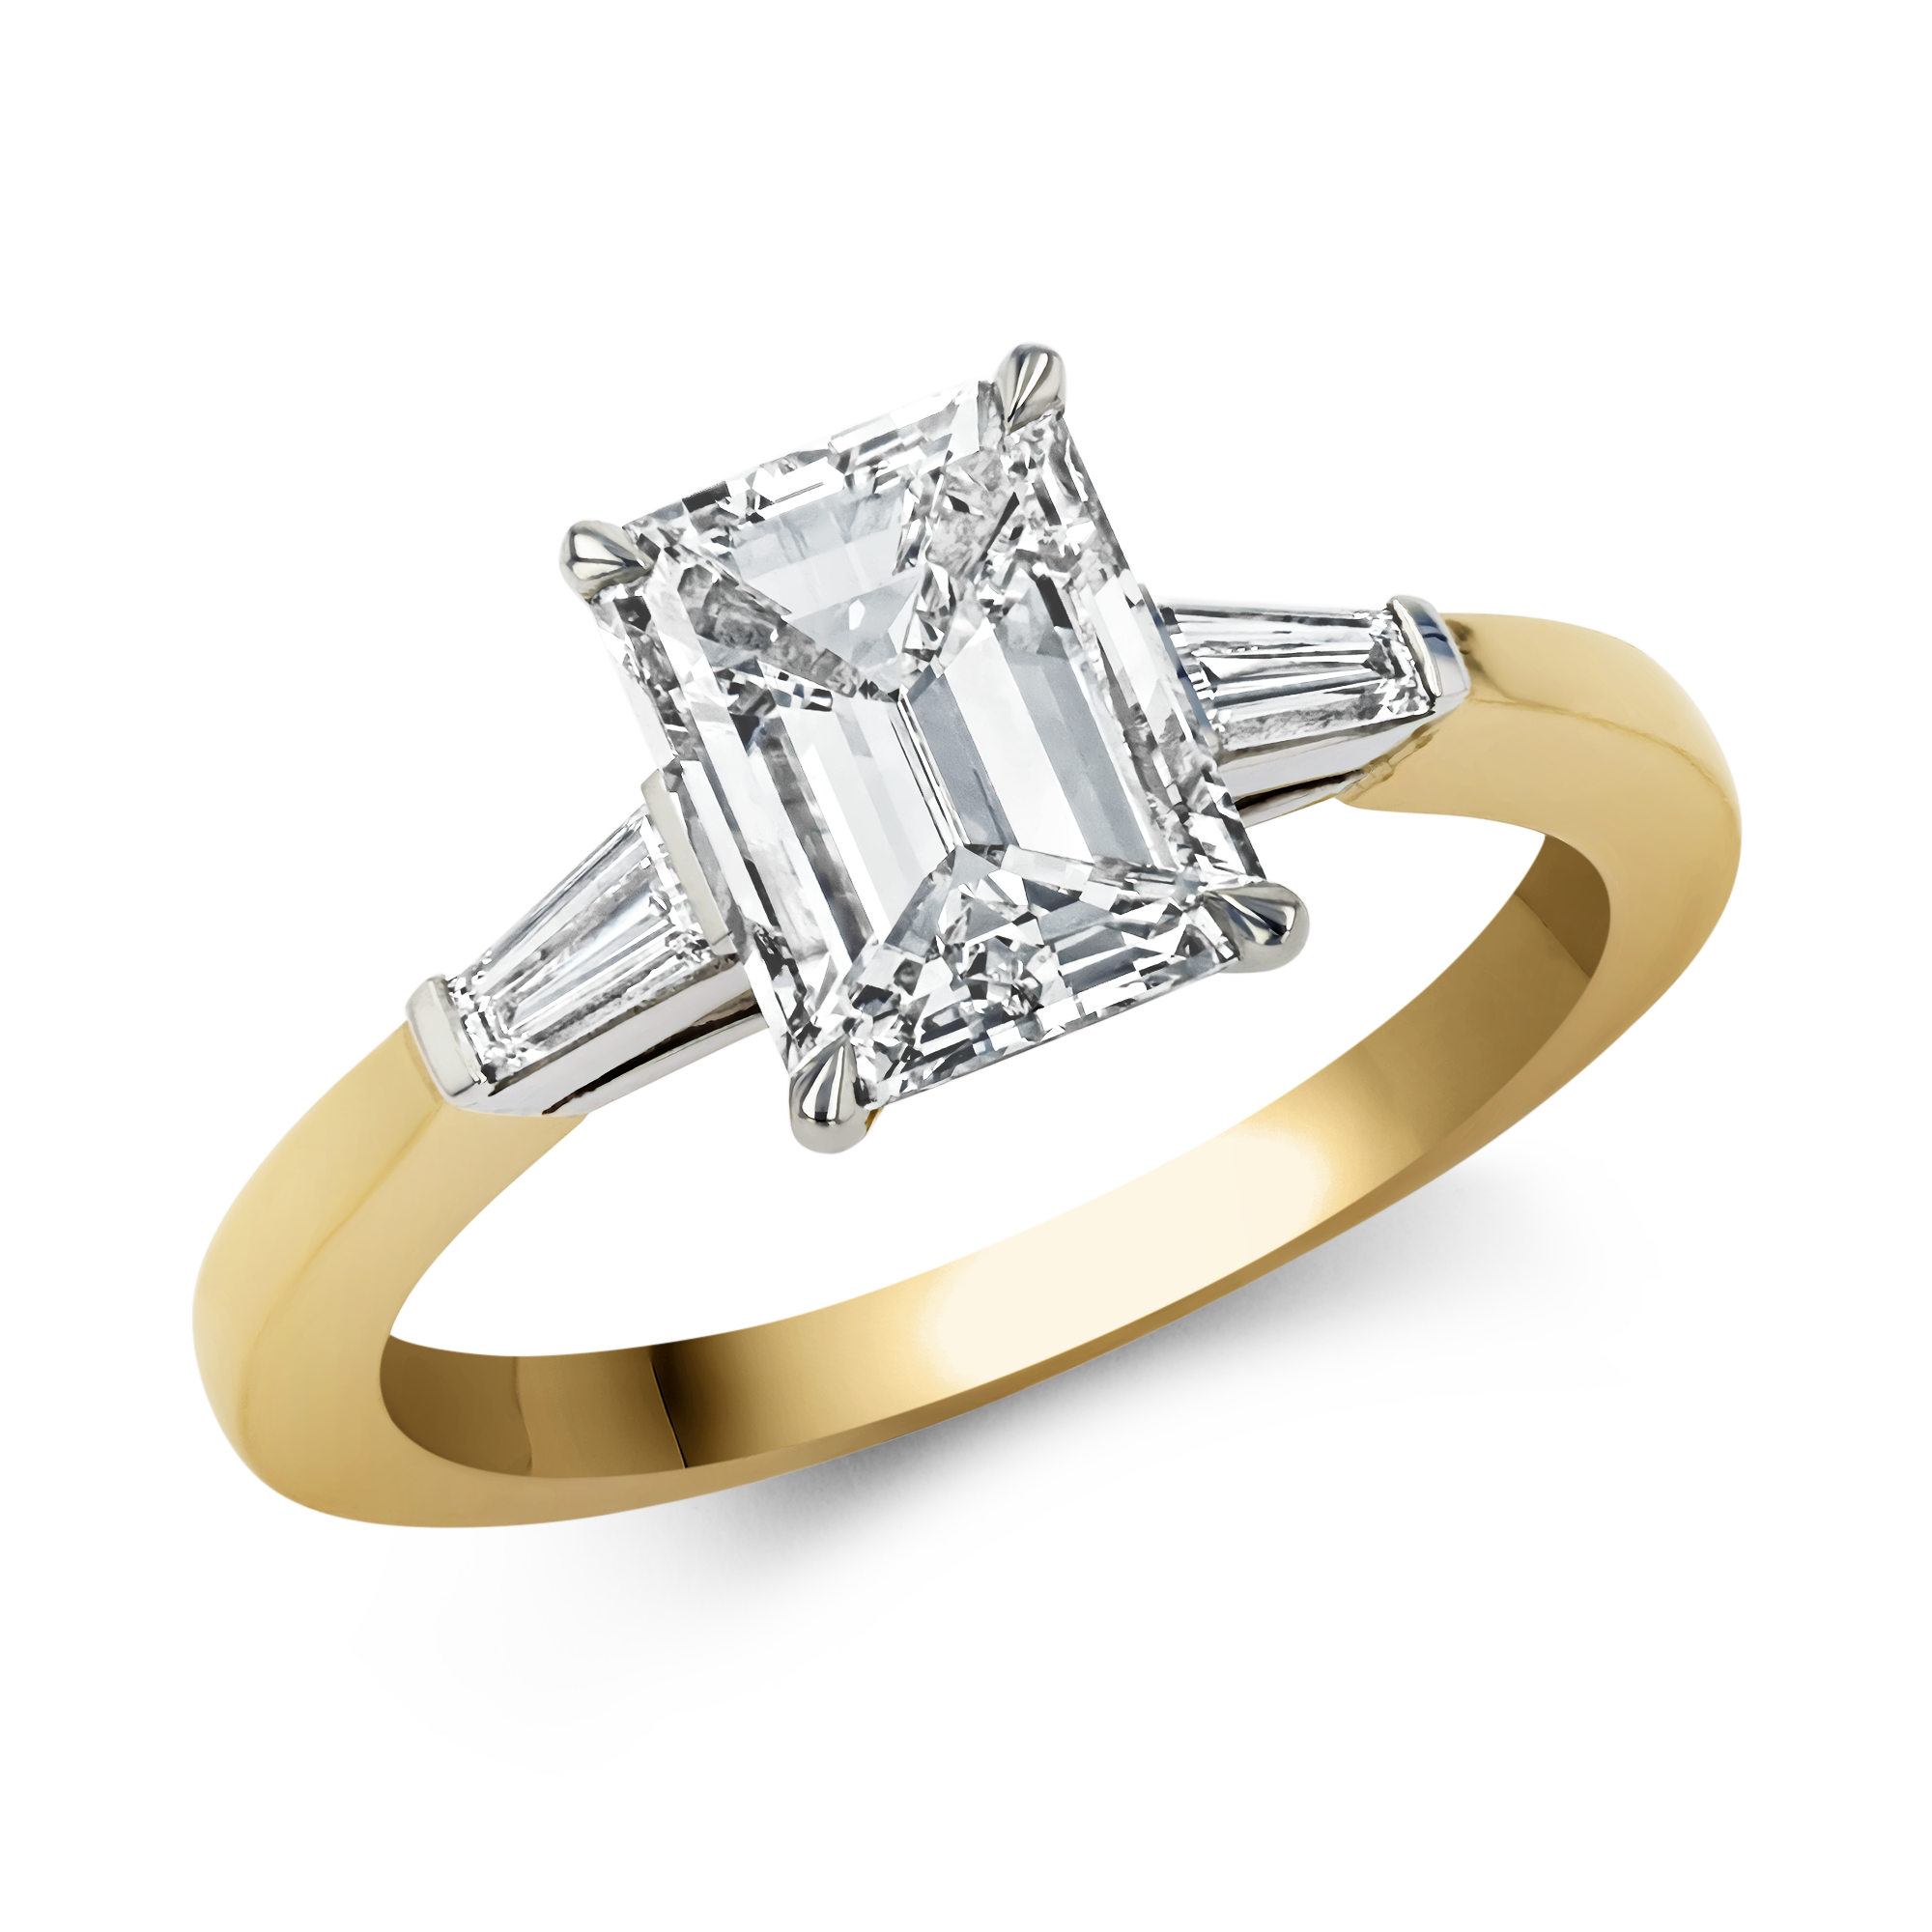 Emerald Cut Diamond Ring with Diamond Shoulders Emerald Cut, Claw Set_1